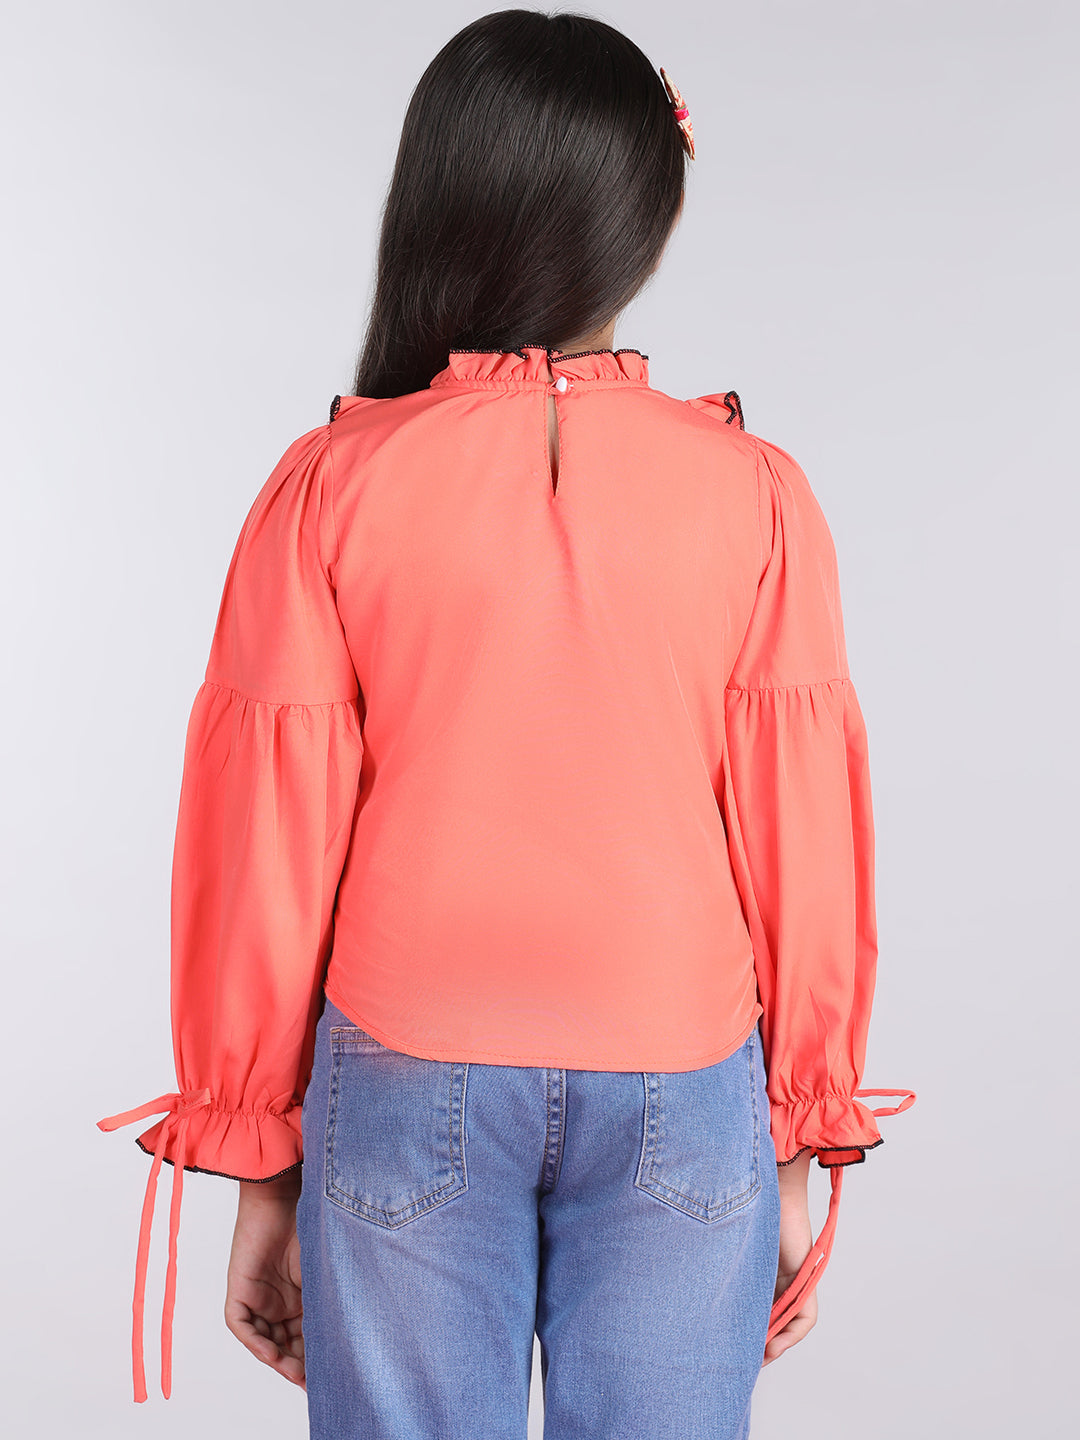 Cutiekins Solid Full Sleeves Polyester Tops-Orange & White